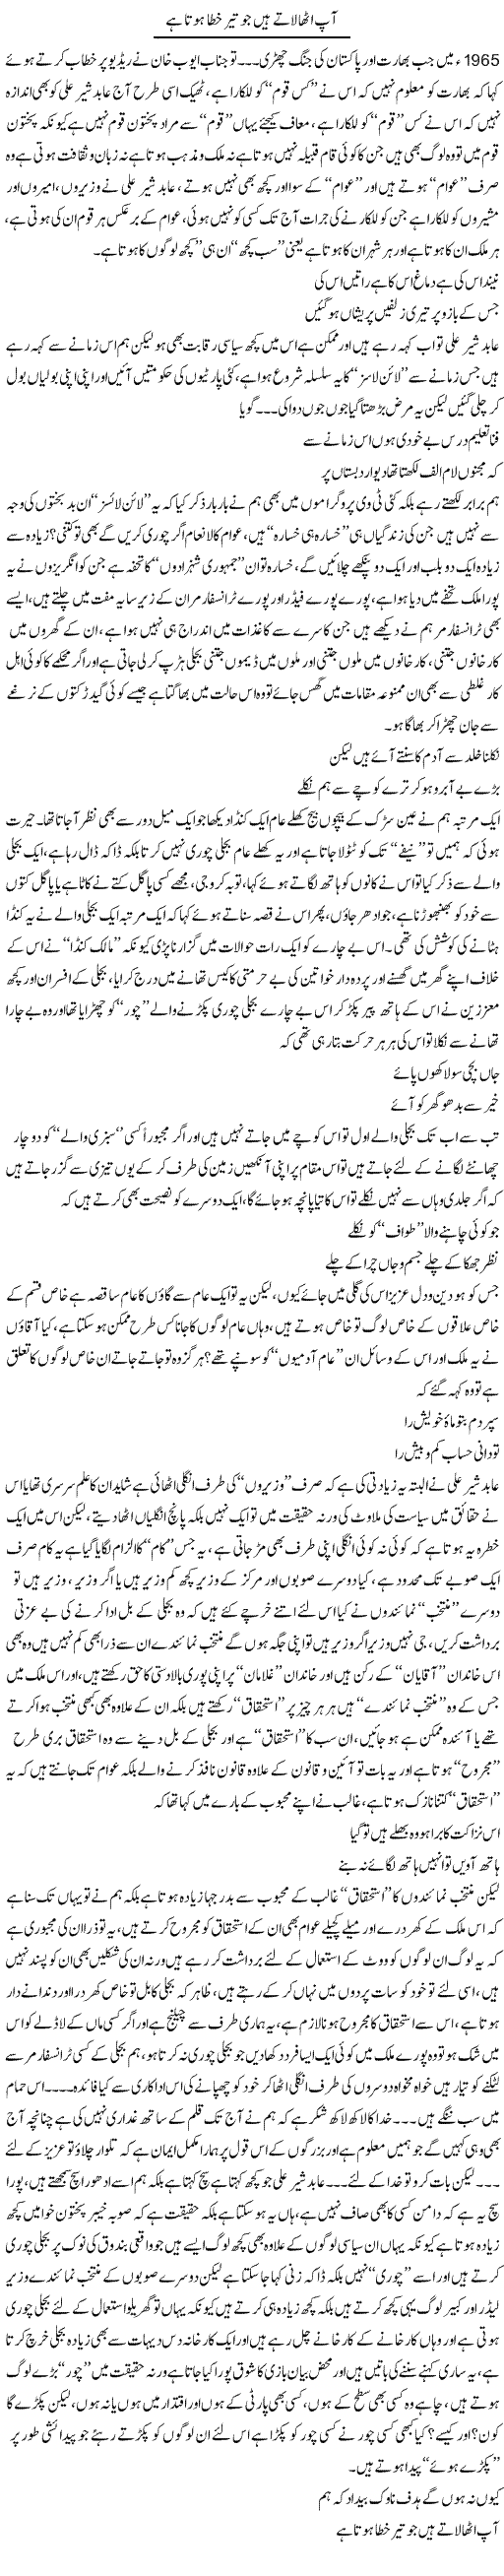 Aap Utha Late Hain Jo Tir Khata Hota Hai | Saad Ullah Jan Barq | Daily Urdu Columns